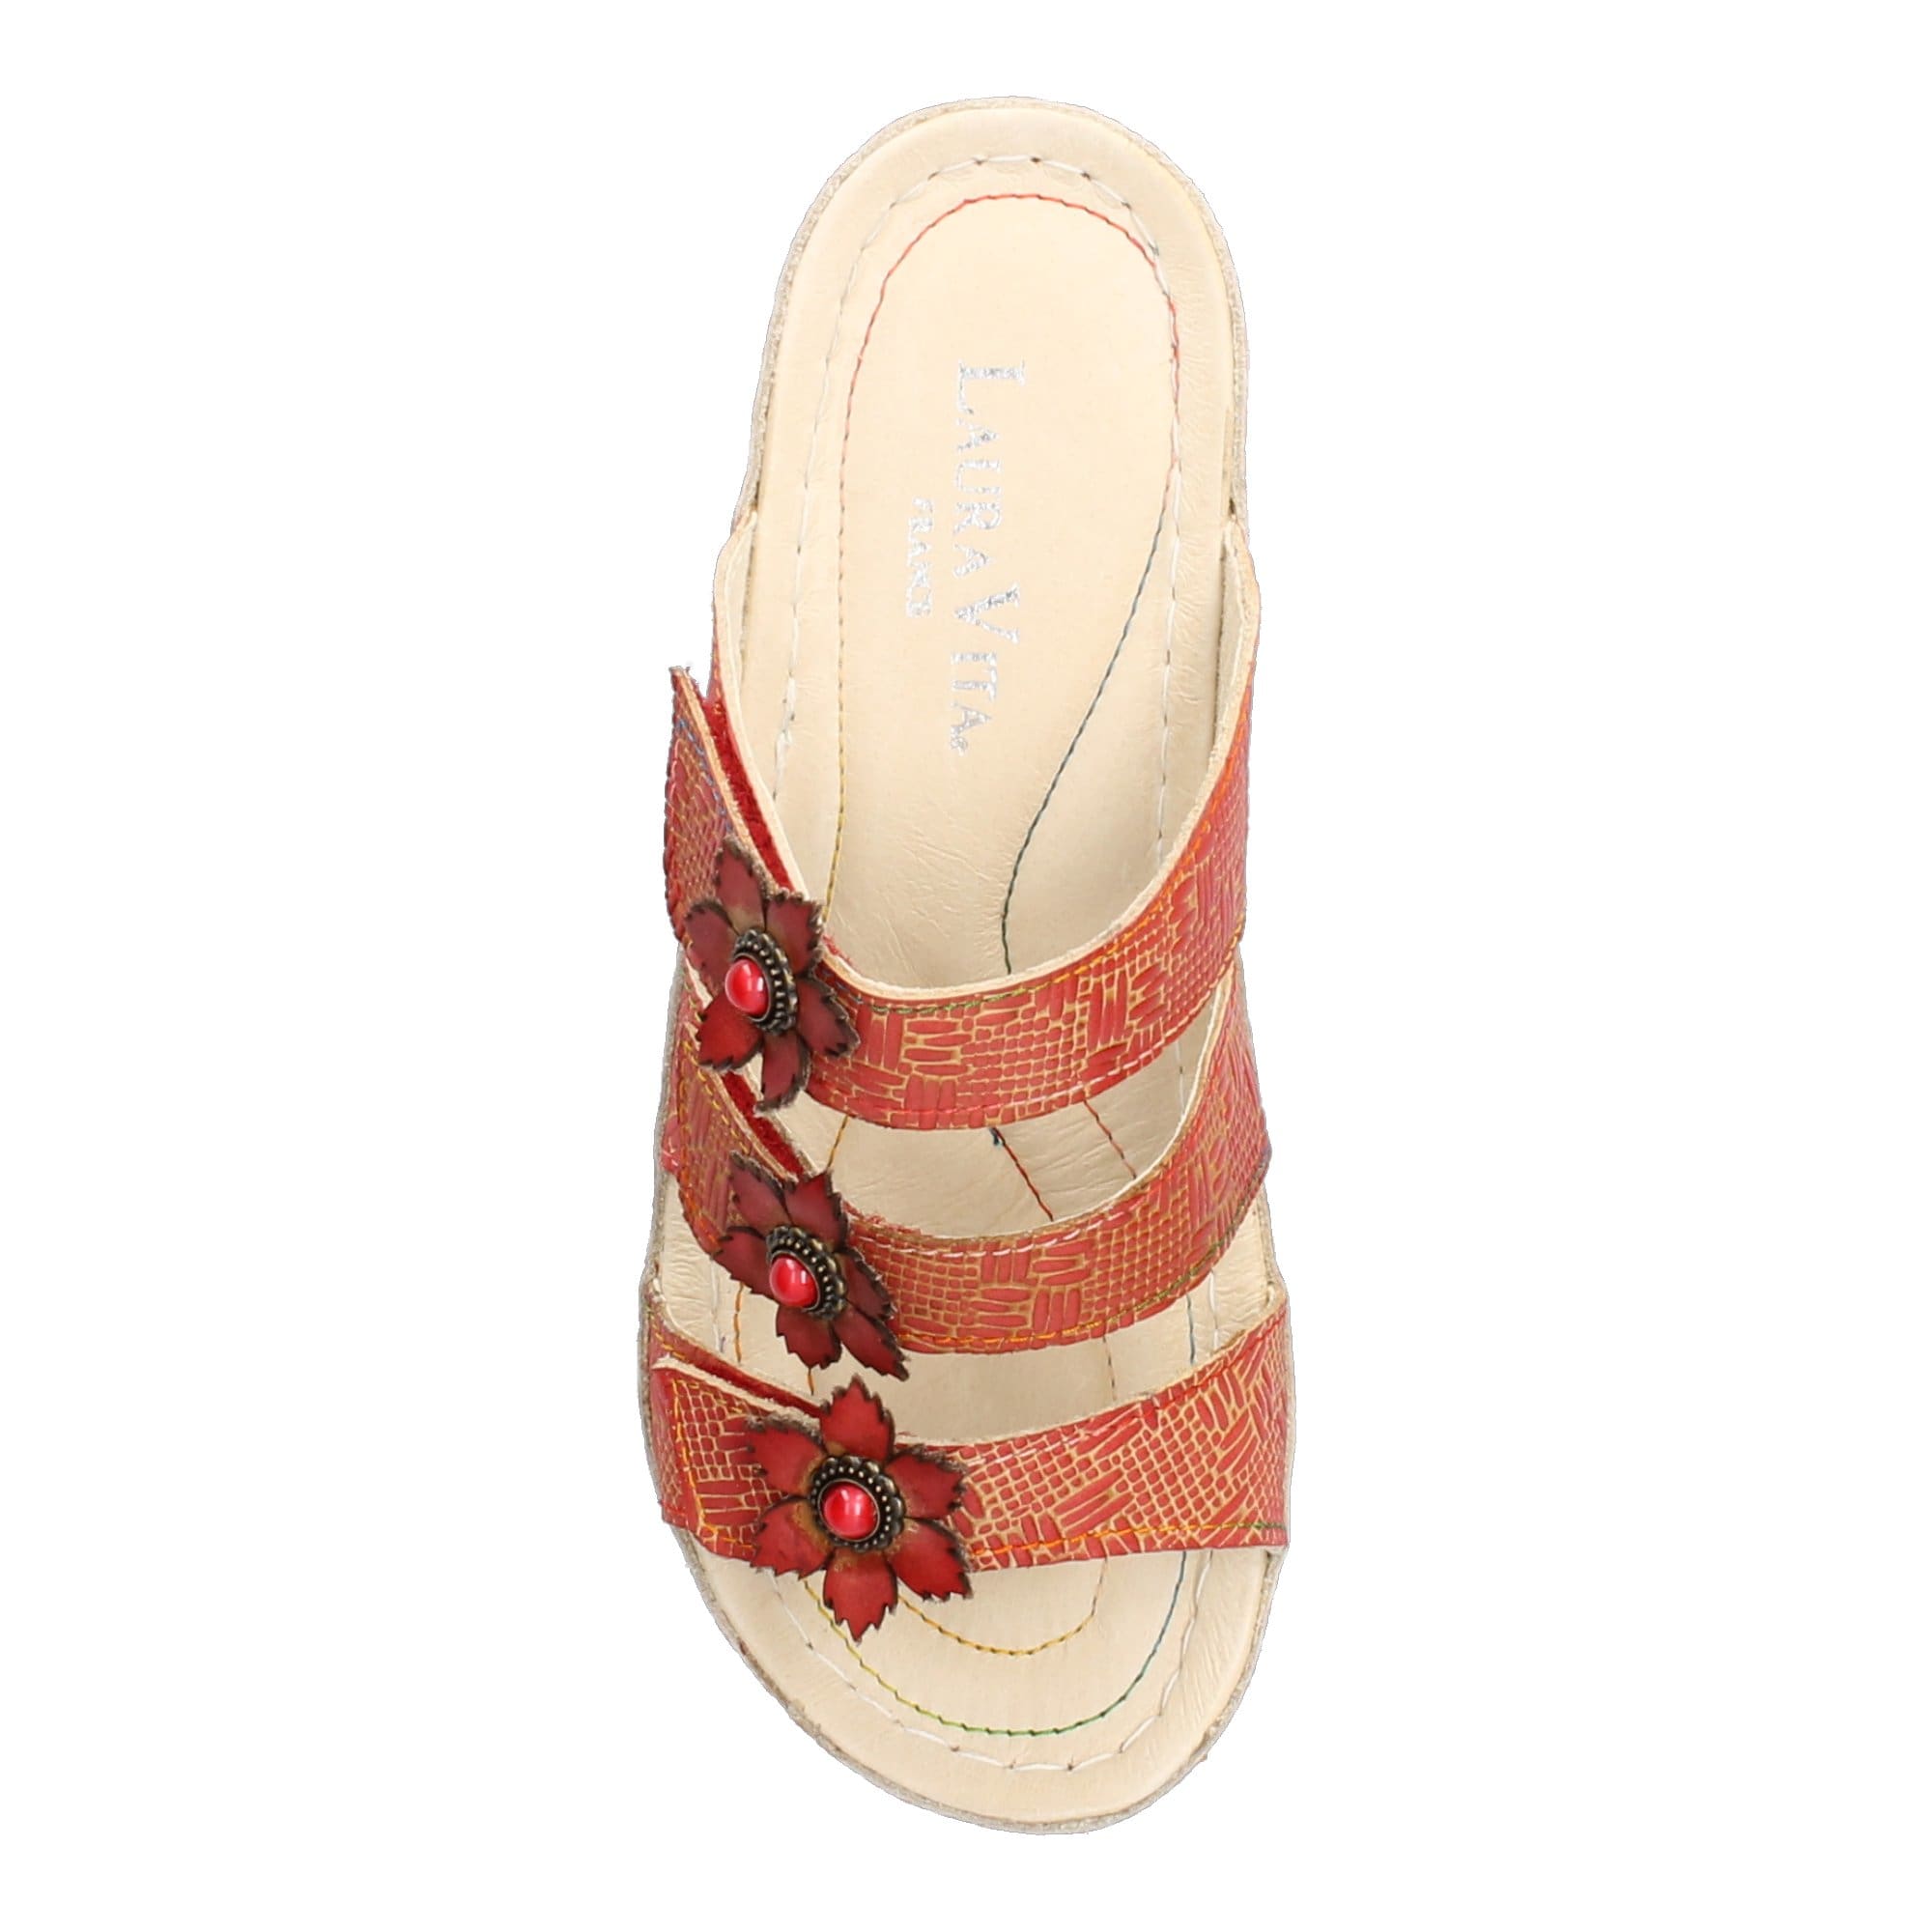 Chaussures FACSCINEO 83 - Sandale